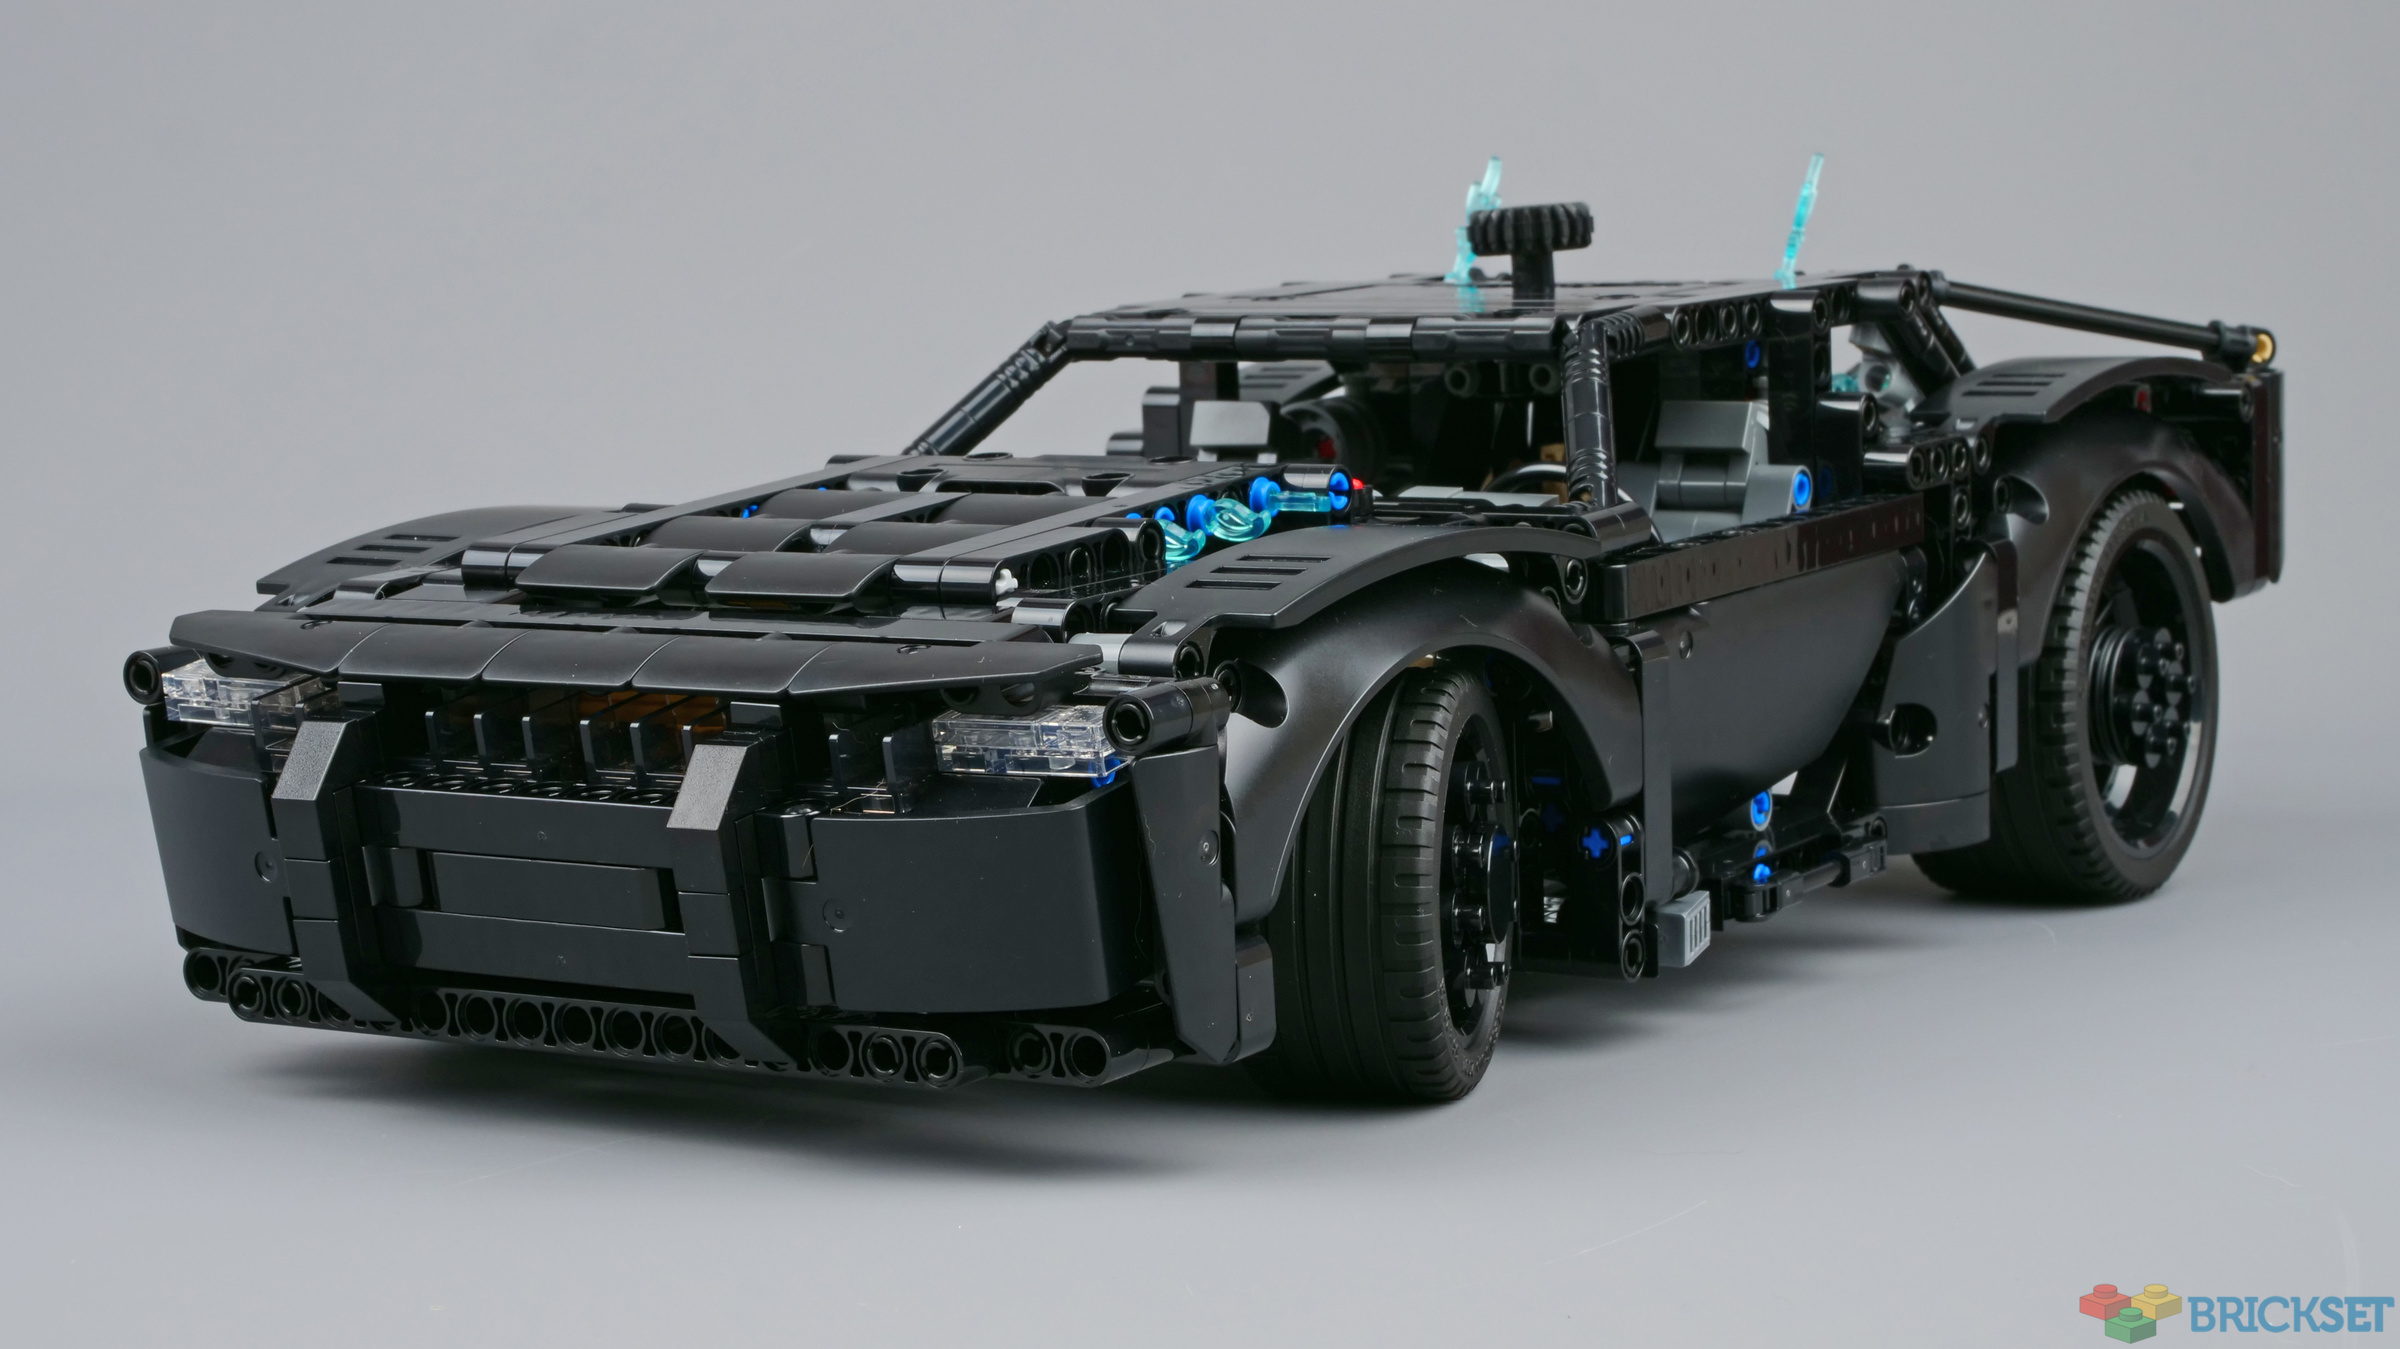 LEGO Technic DC - 42127 The Batman Batmobile - Budget Black Beauty